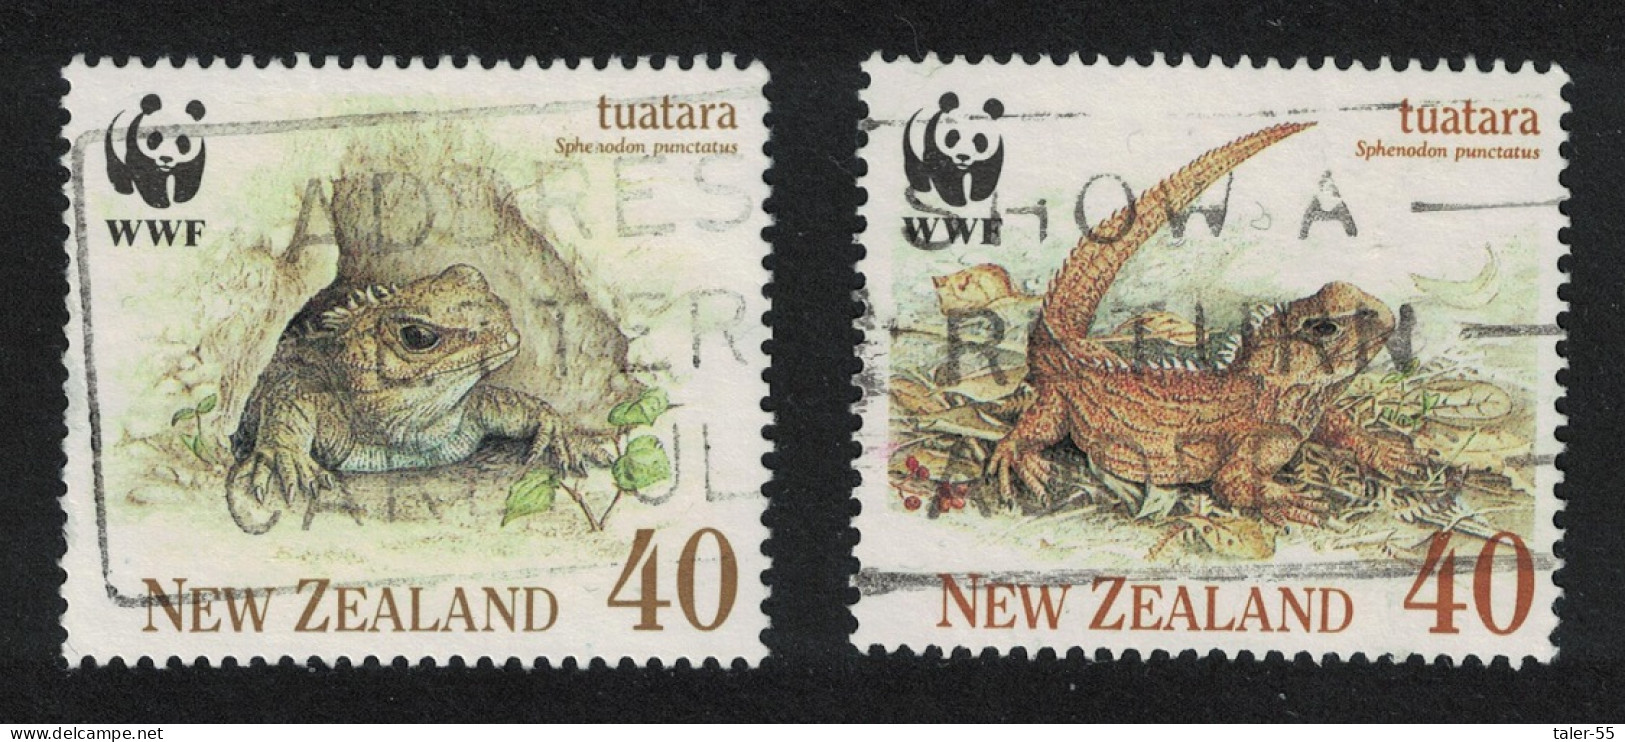 New Zealand WWF Tuatara 2V 1991 Canc SG#1590-1593 MI#1160-1163 Sc#1023-1026 - Gebraucht